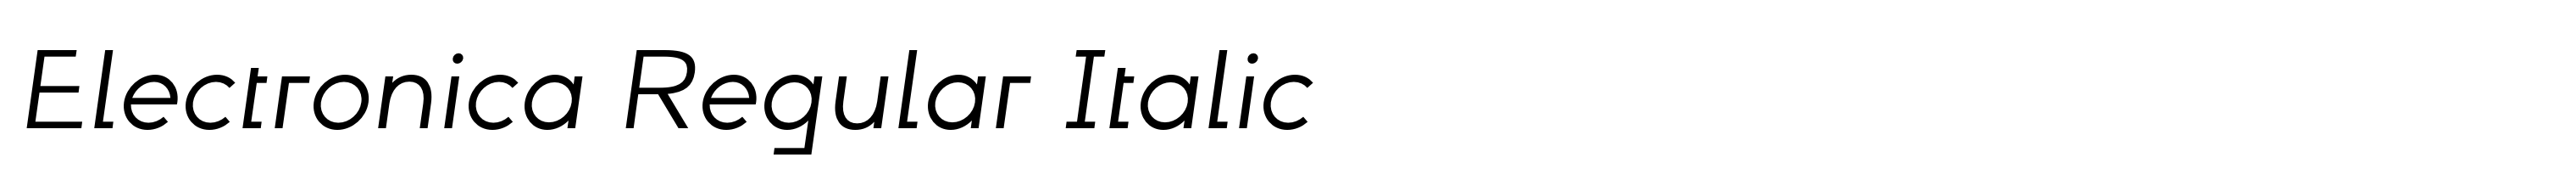 Electronica Regular Italic